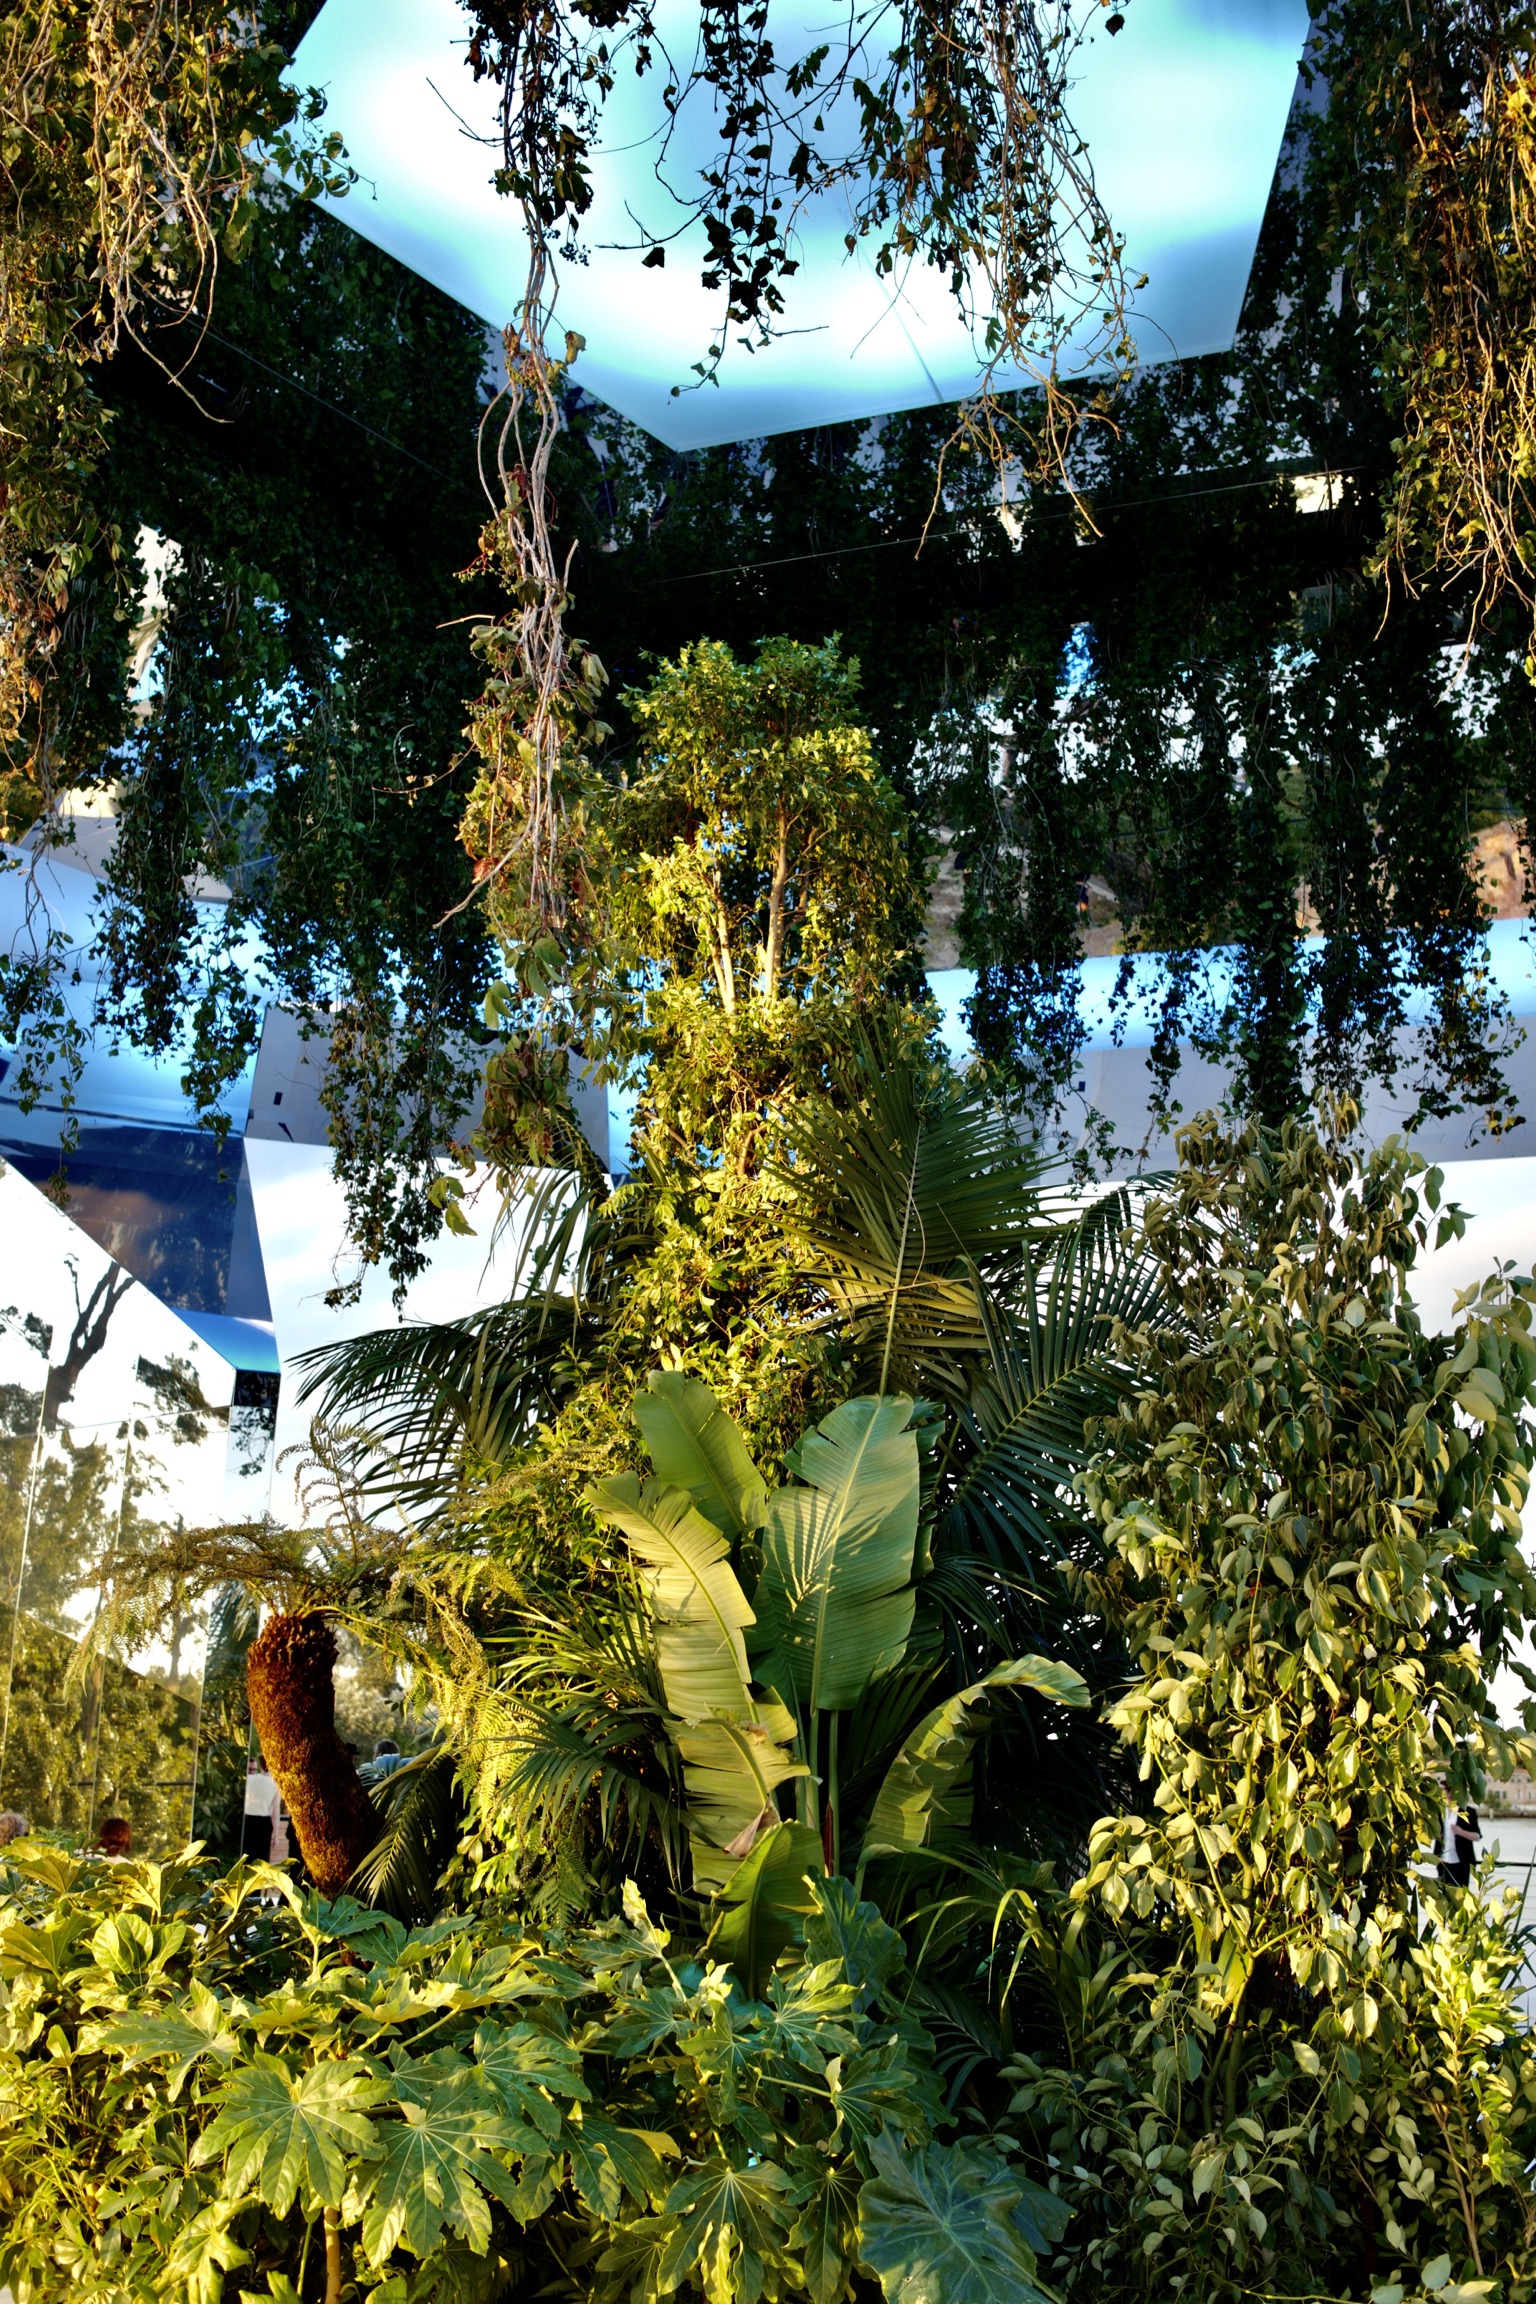 Doug Aitken, Green Lens, 2021. Photography by Chris Wallace.